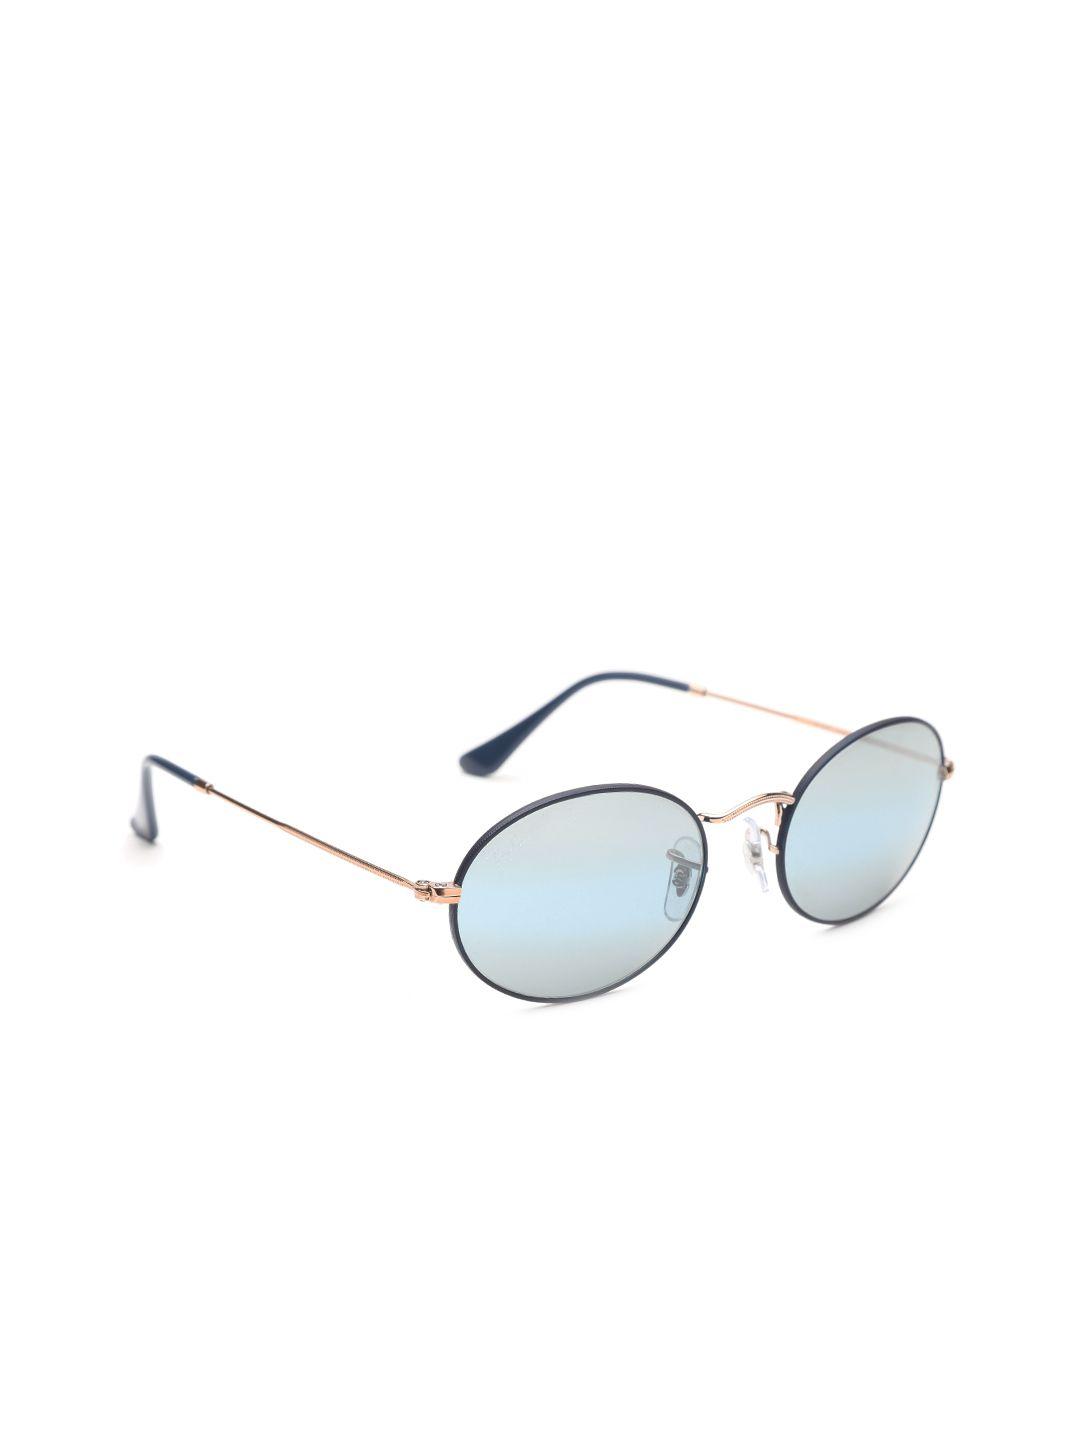 ray-ban unisex mirrored oval sunglasses 0rb35479156aj